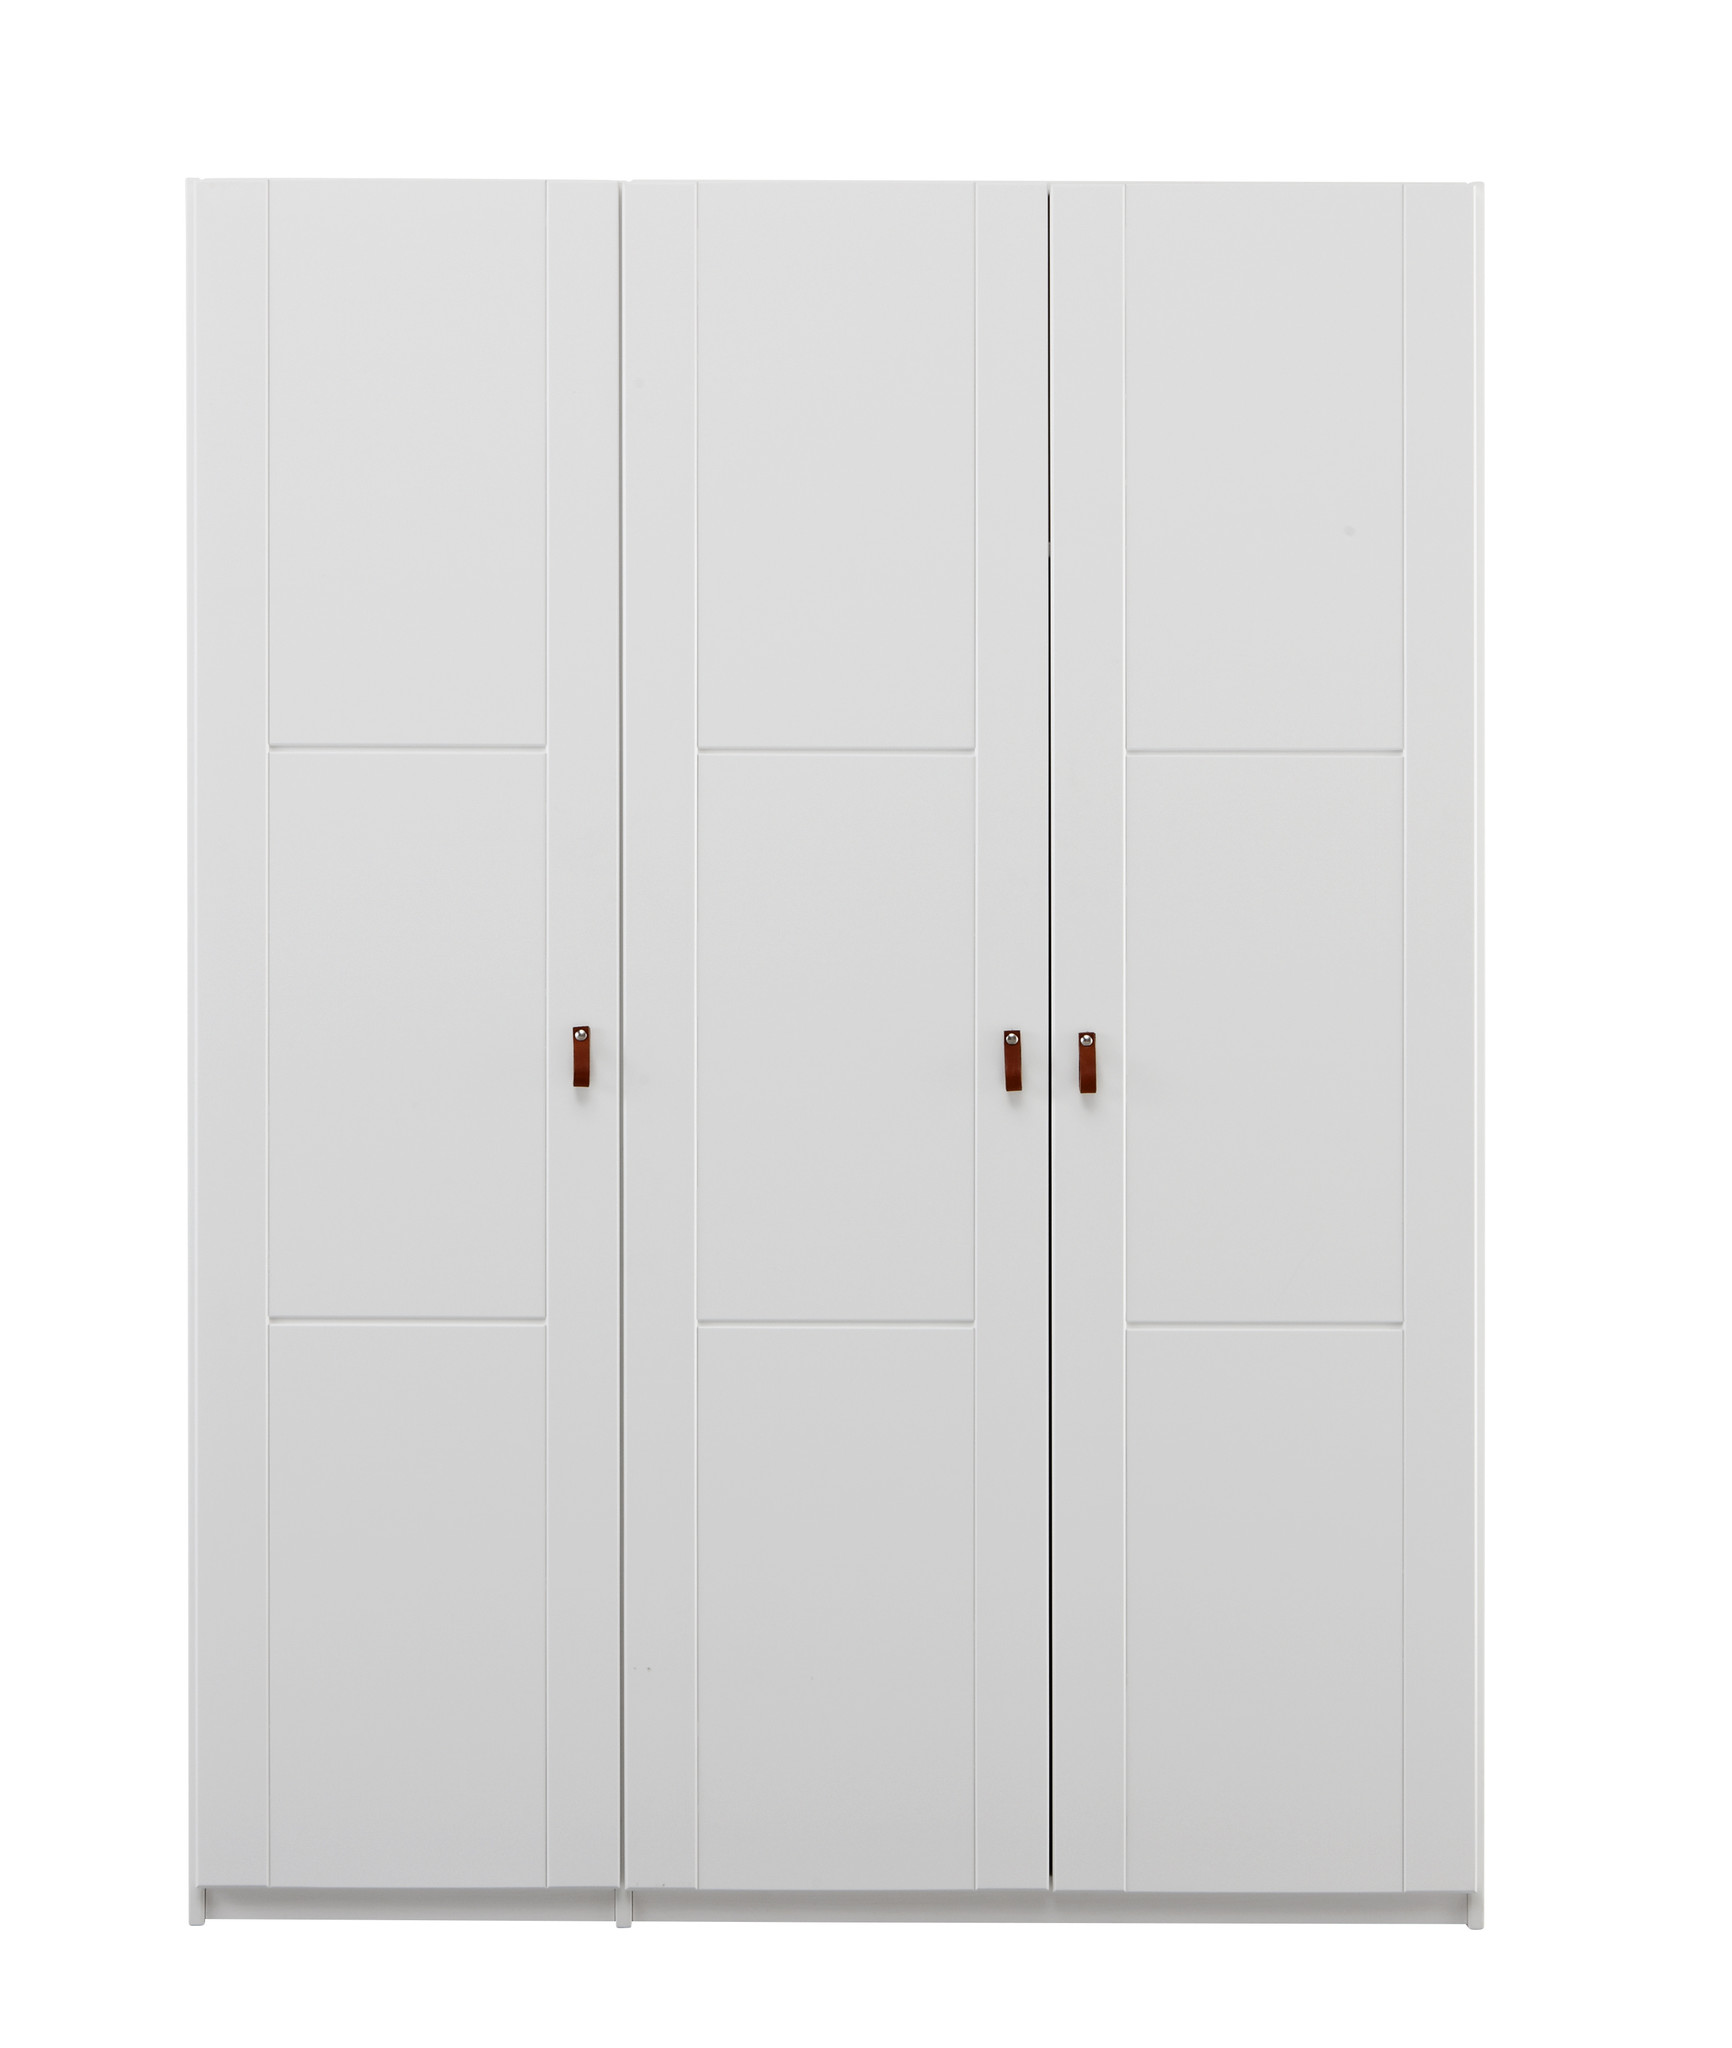 LIFETIME KIDSROOMS Closet 16 cm with 16 doors in white